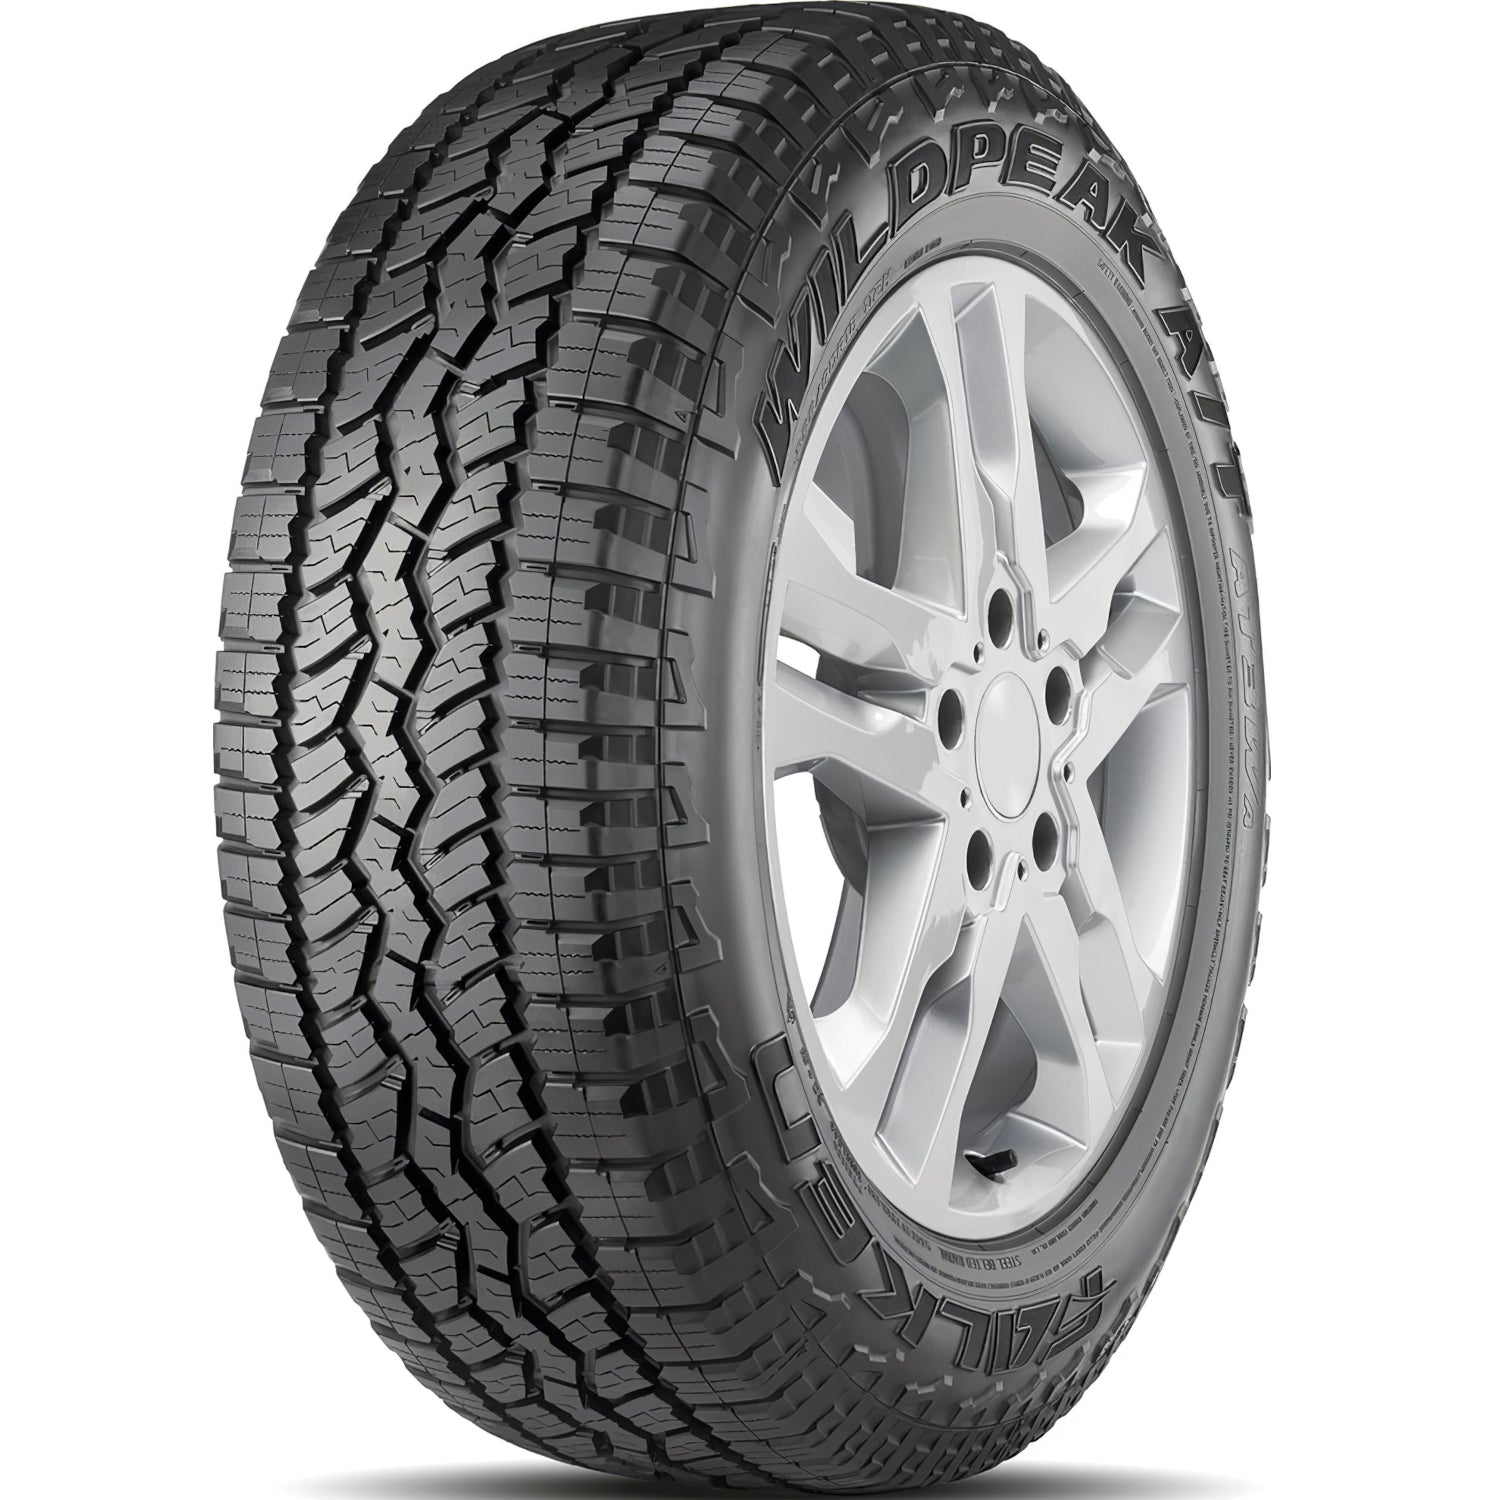 FALKEN WILDPEAK AT3WA 275/55R20 (32X10.8R 20) Tires